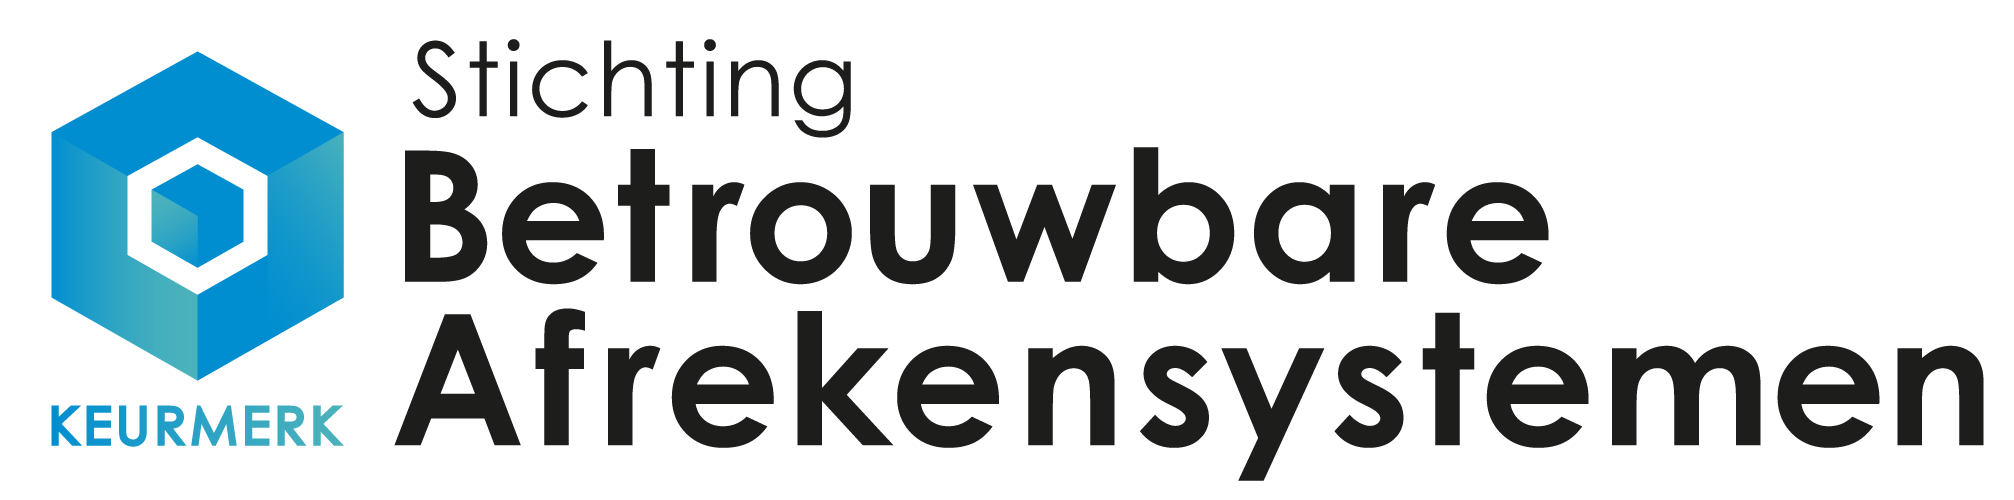 Logo Stichting Betrouwbare Afrekensystemen